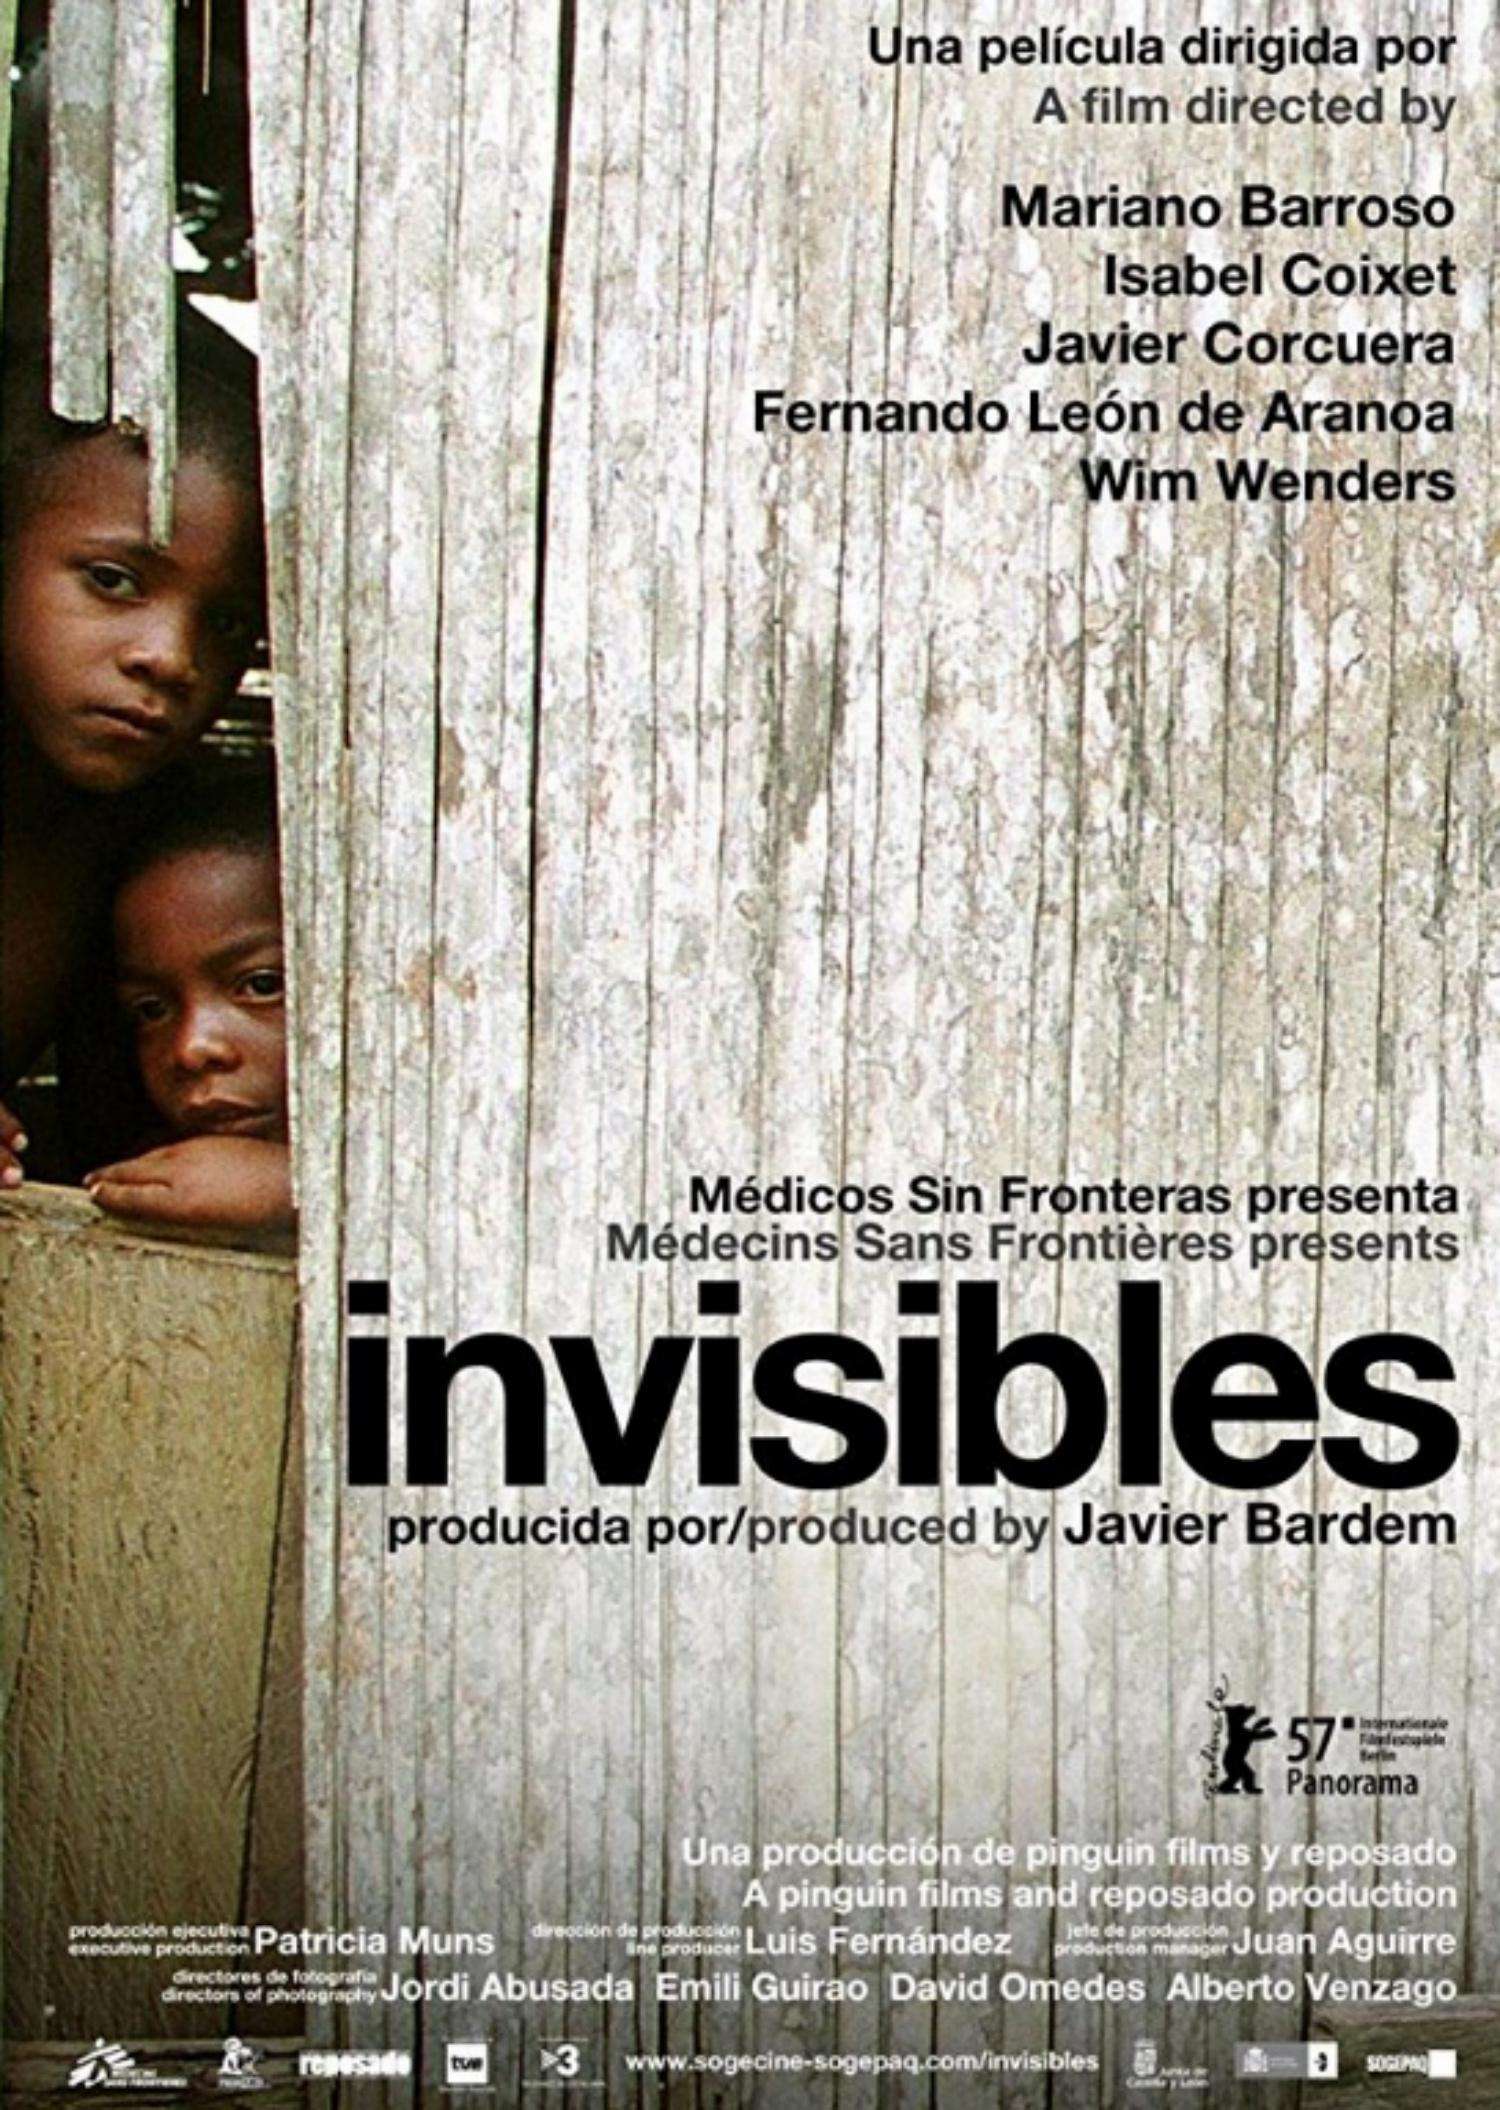 Invisibles - 5 short films about forgotten crises